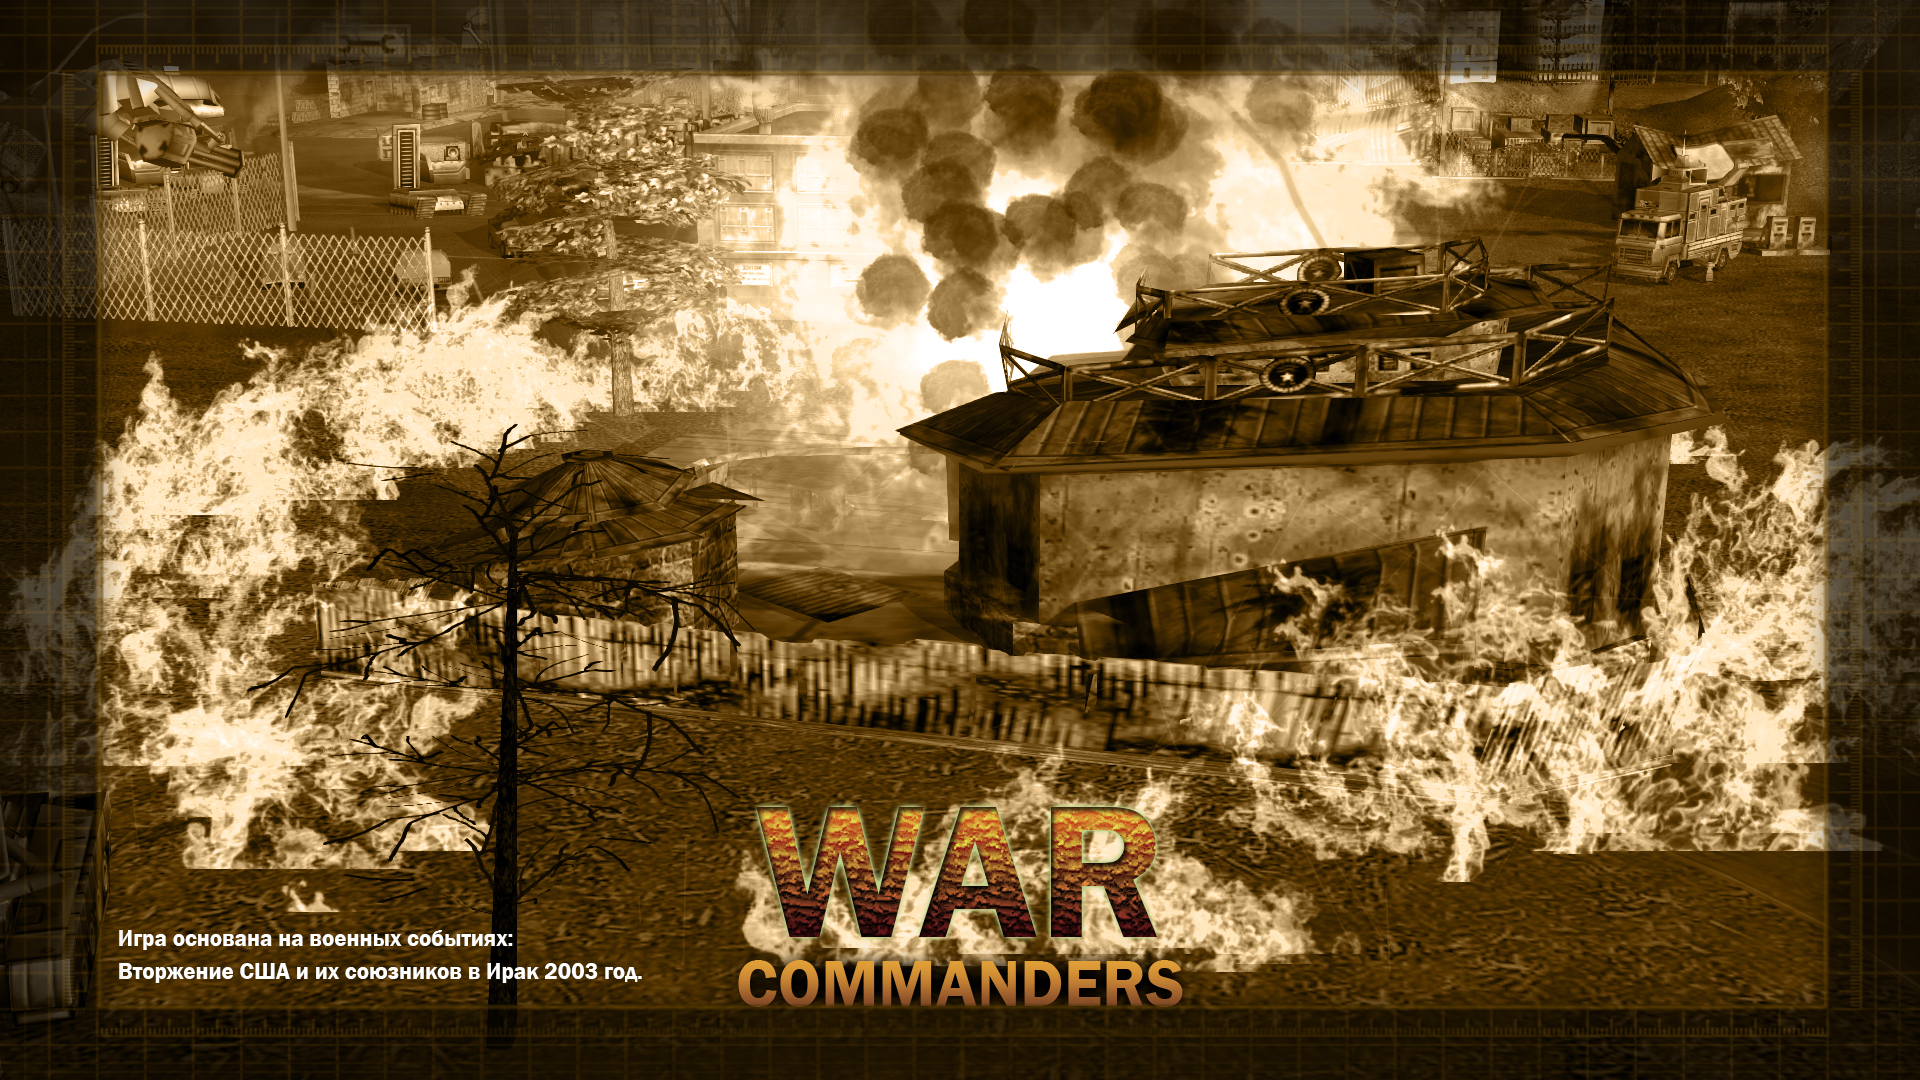 Tank Battle : War Commander free instals